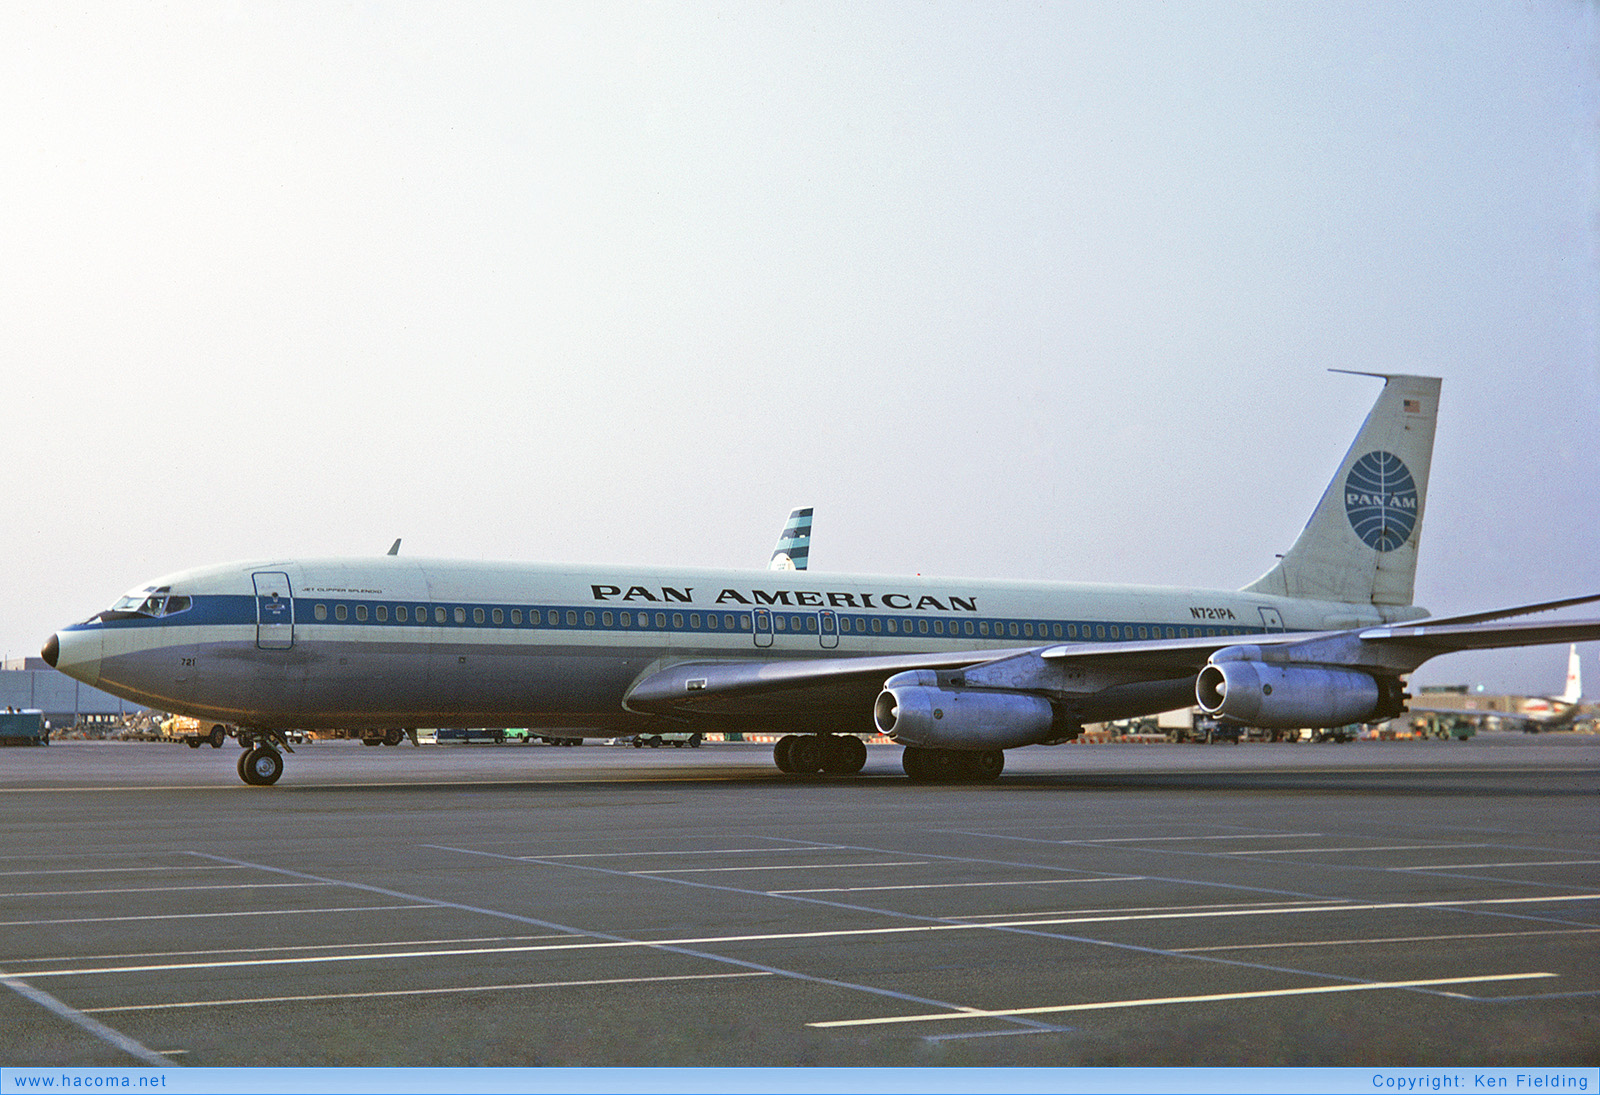 Photo of N721PA - Pan Am Clipper Splendid - John F. Kennedy International Airport - Jul 9, 1970